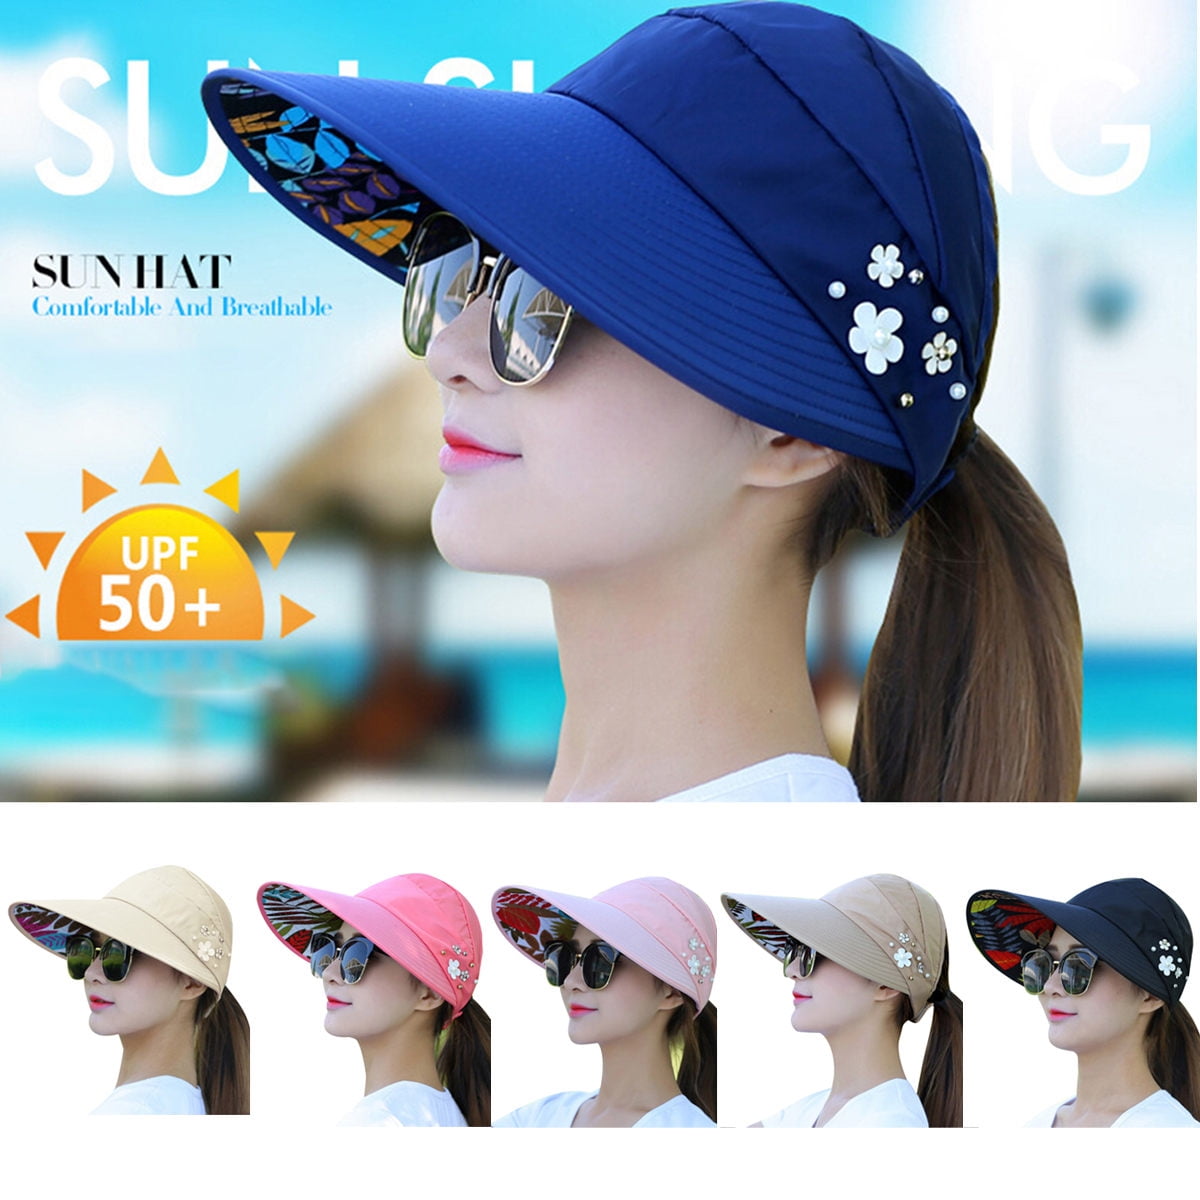 Qisiwole Extra Wide Brim Sun Visor Packable Open Top Bucket Hats Women UV Protection Beach Strap Hat Deals, Women's, Size: One size, Blue